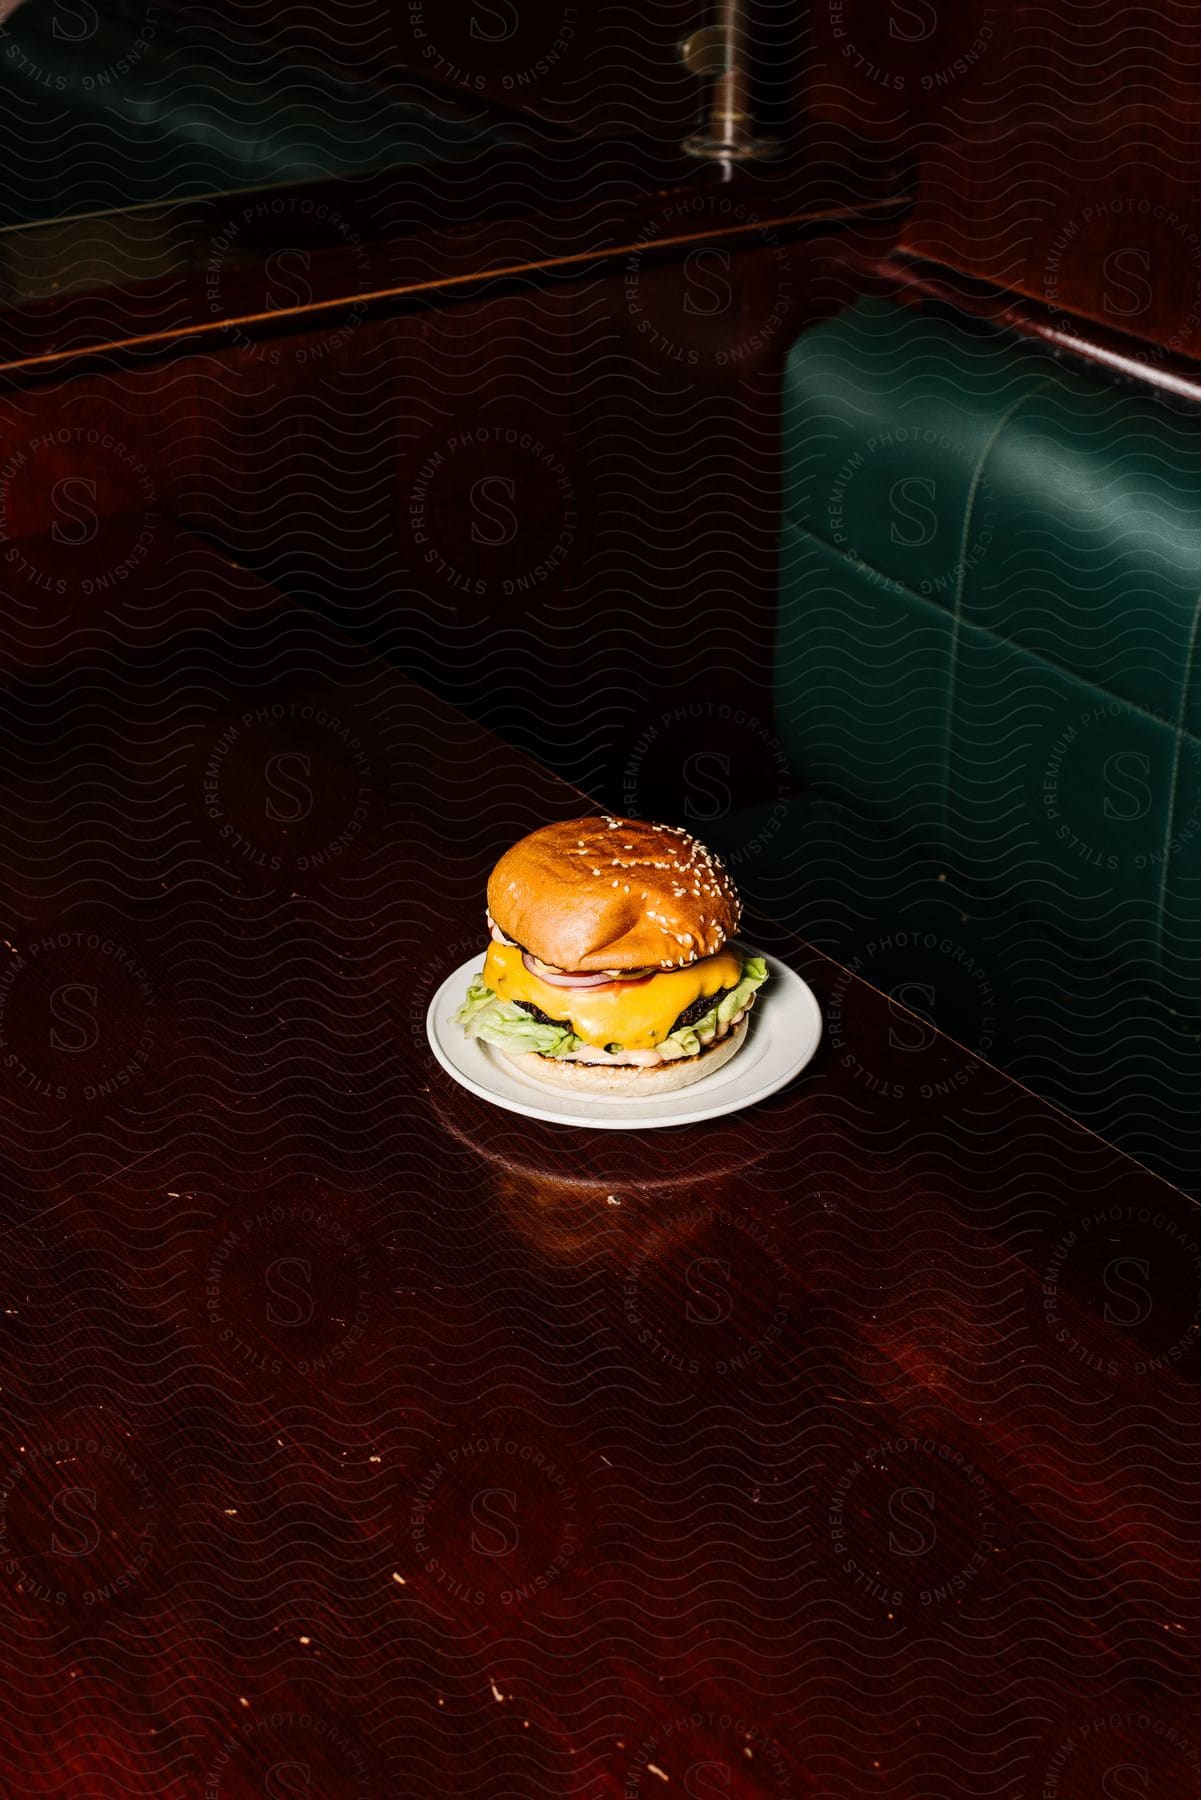 A cheeseburger on a restaurant table.